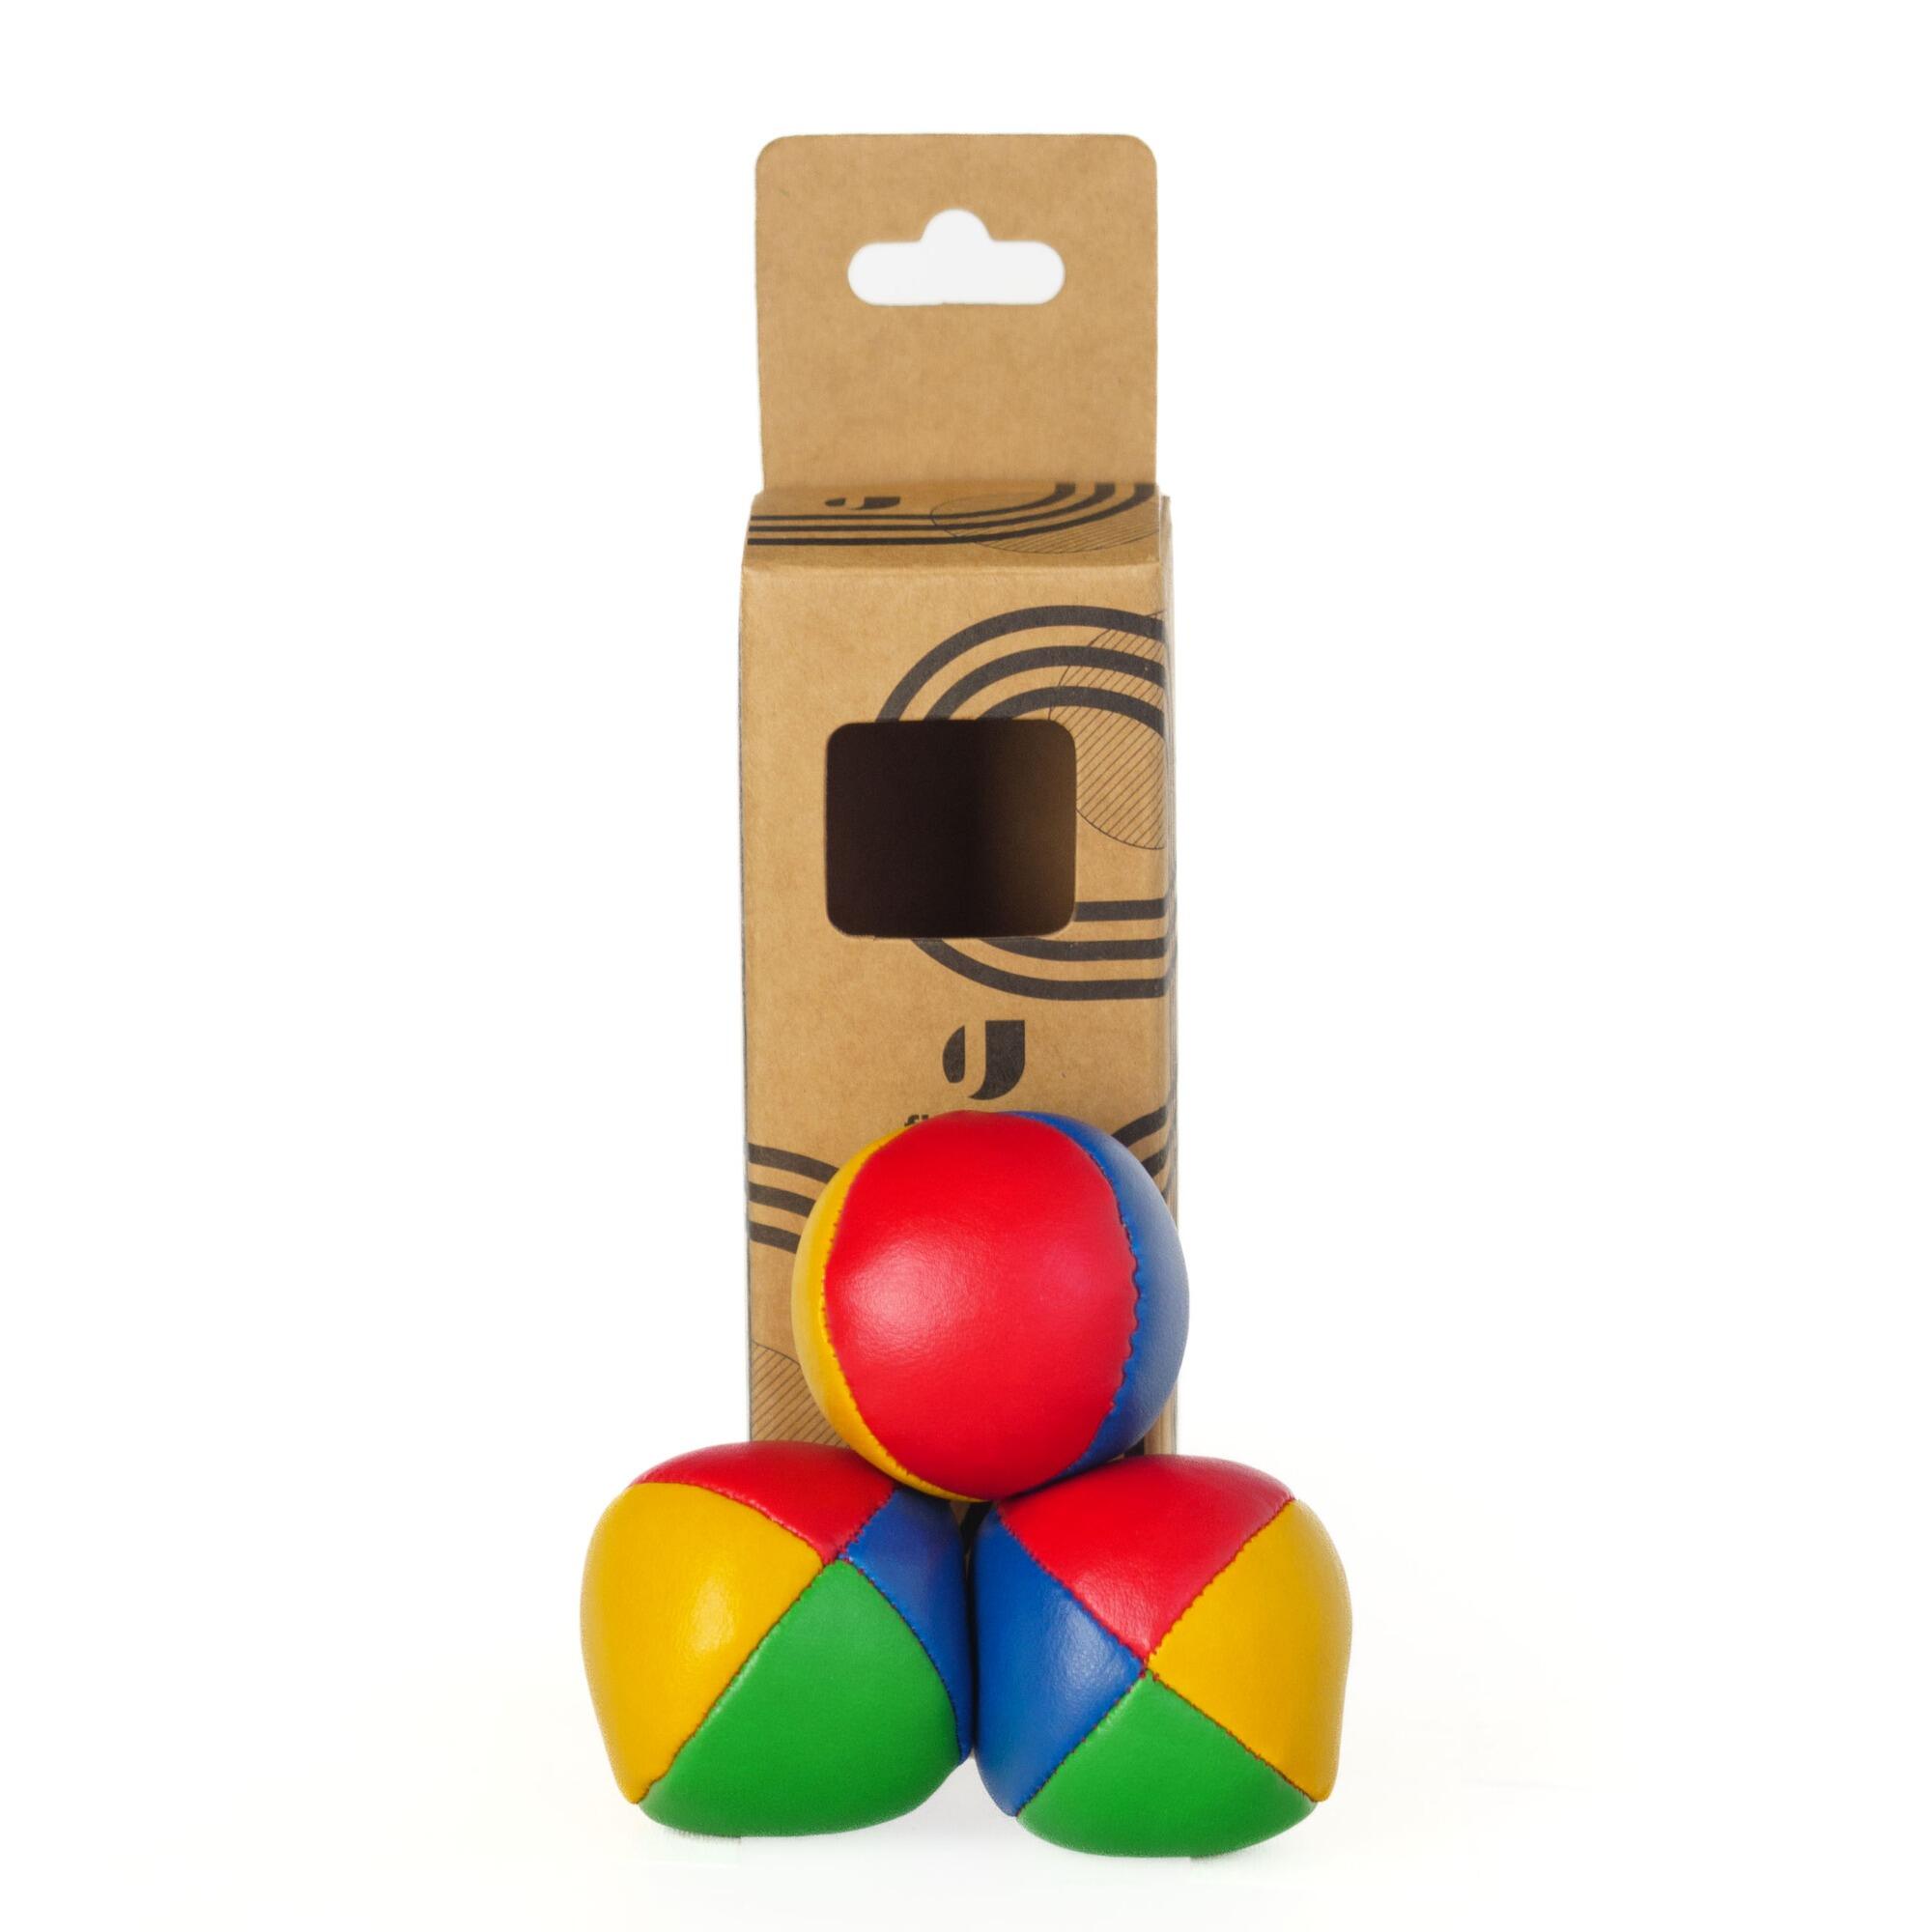 Firetoys Juggling - 70g Thud - Set of 3x Juggling Balls 1/1